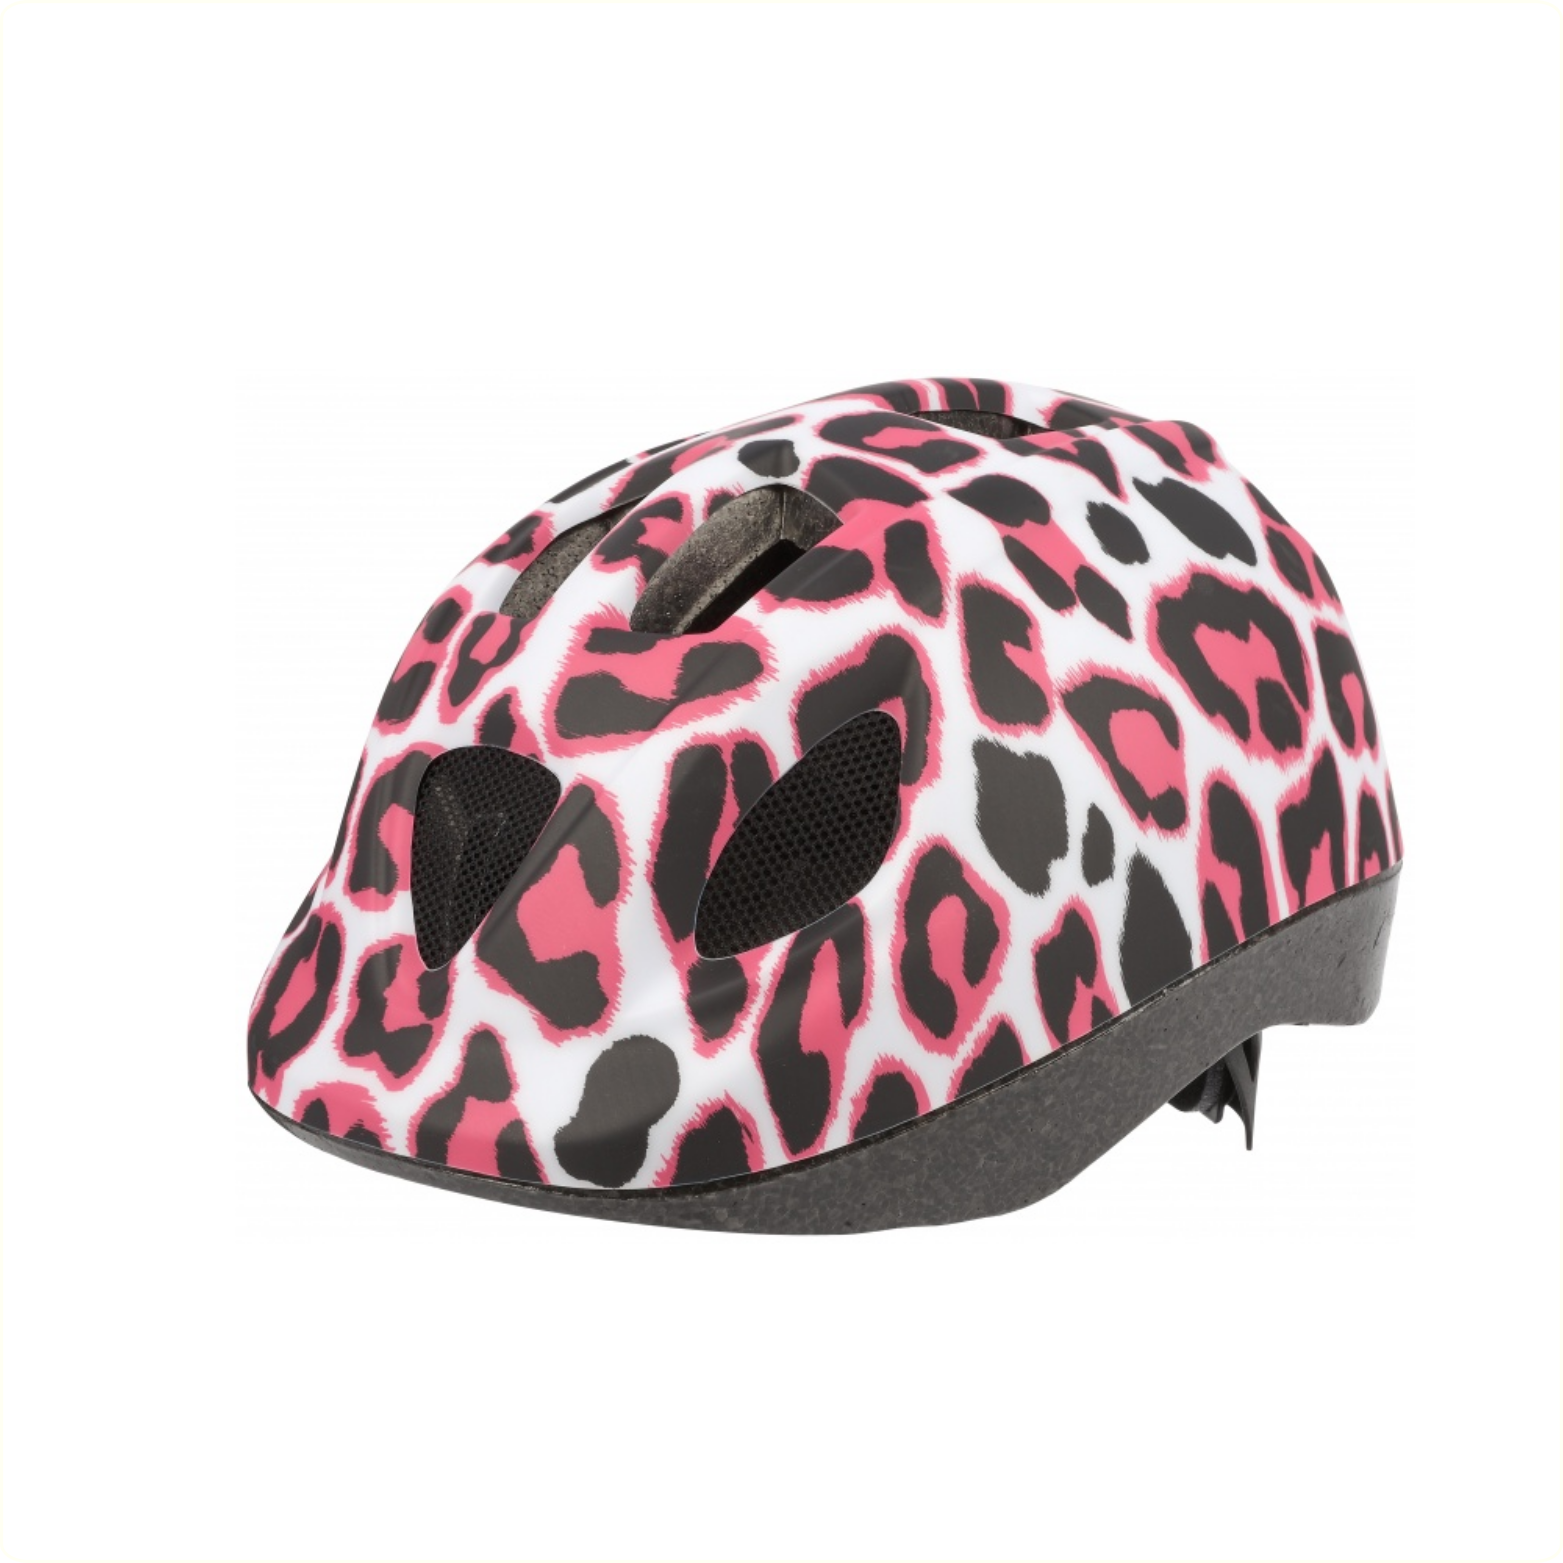 Kinder helm 46-53cm polisport cheetah wit roze zwart